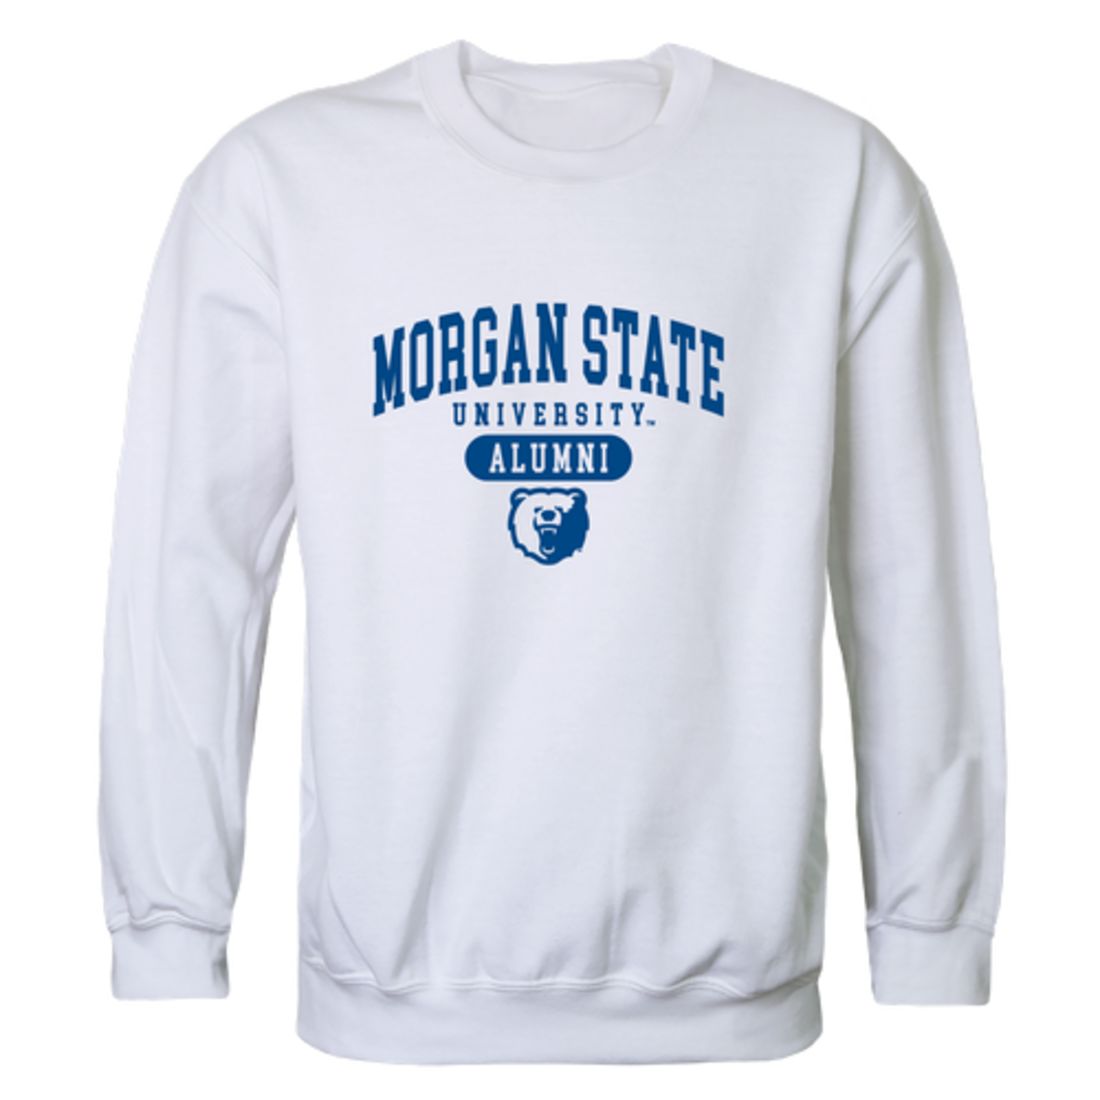 Morgan State University Bears Alumni Fleece Crewneck Pullover Sweatshirt Heather Gray-Campus-Wardrobe